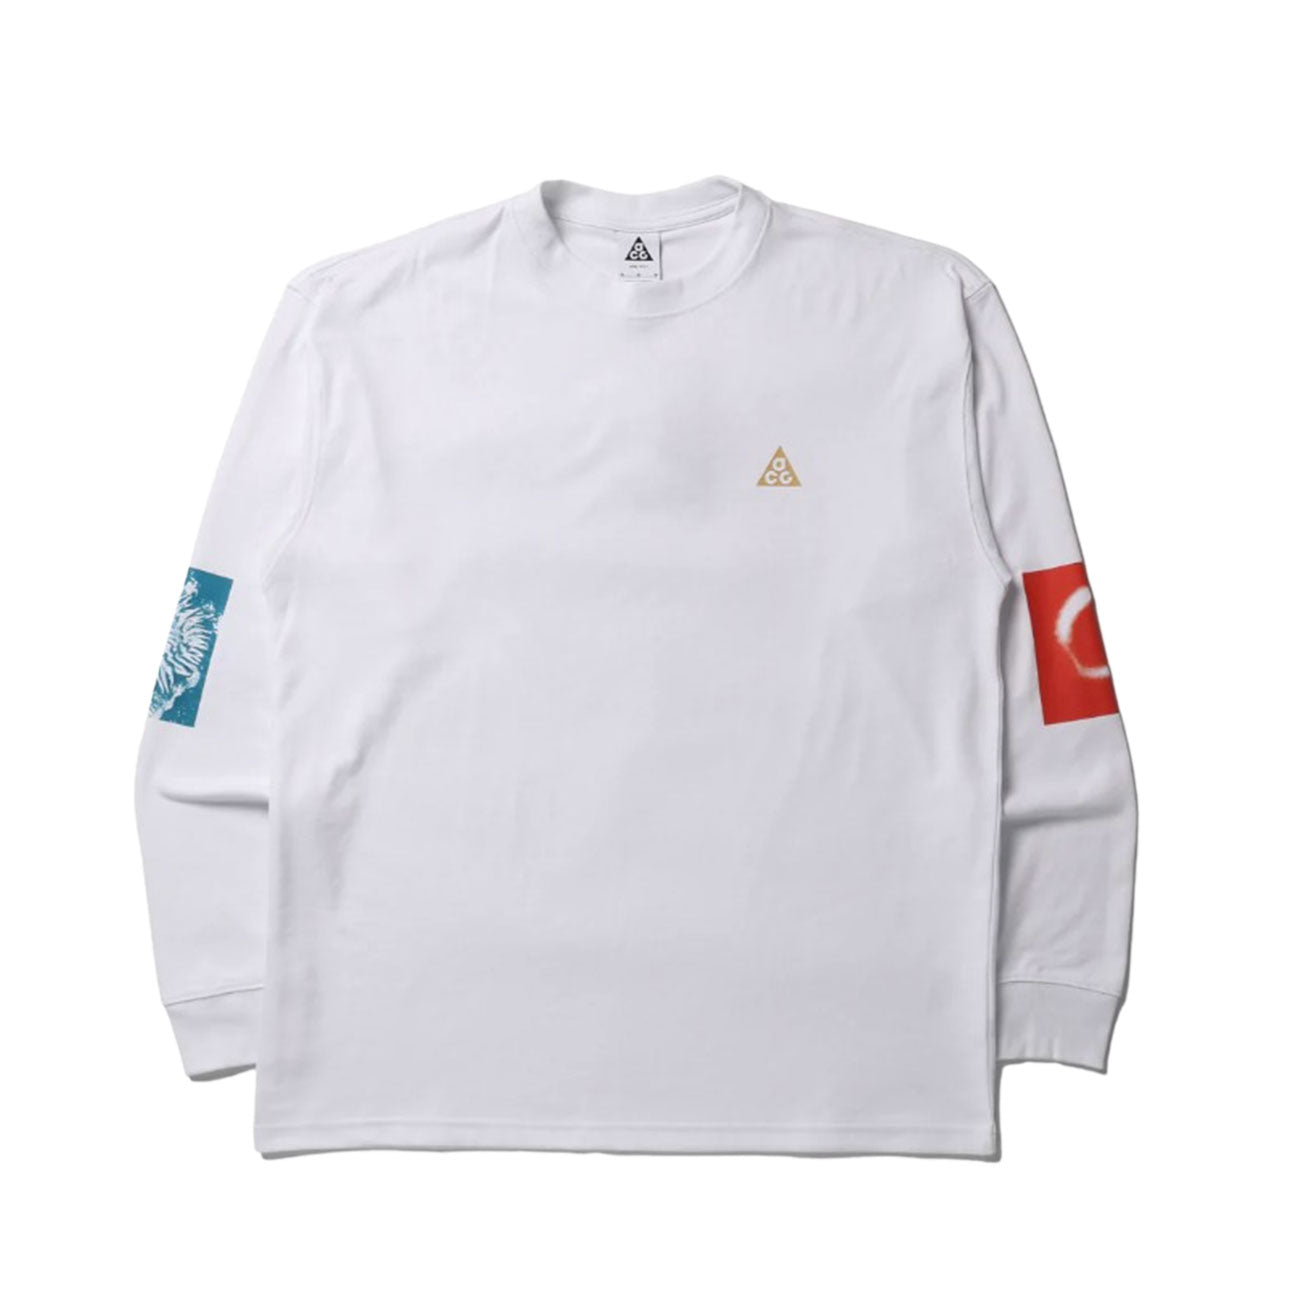 Nike ACG Longsleeve Shirt (White)